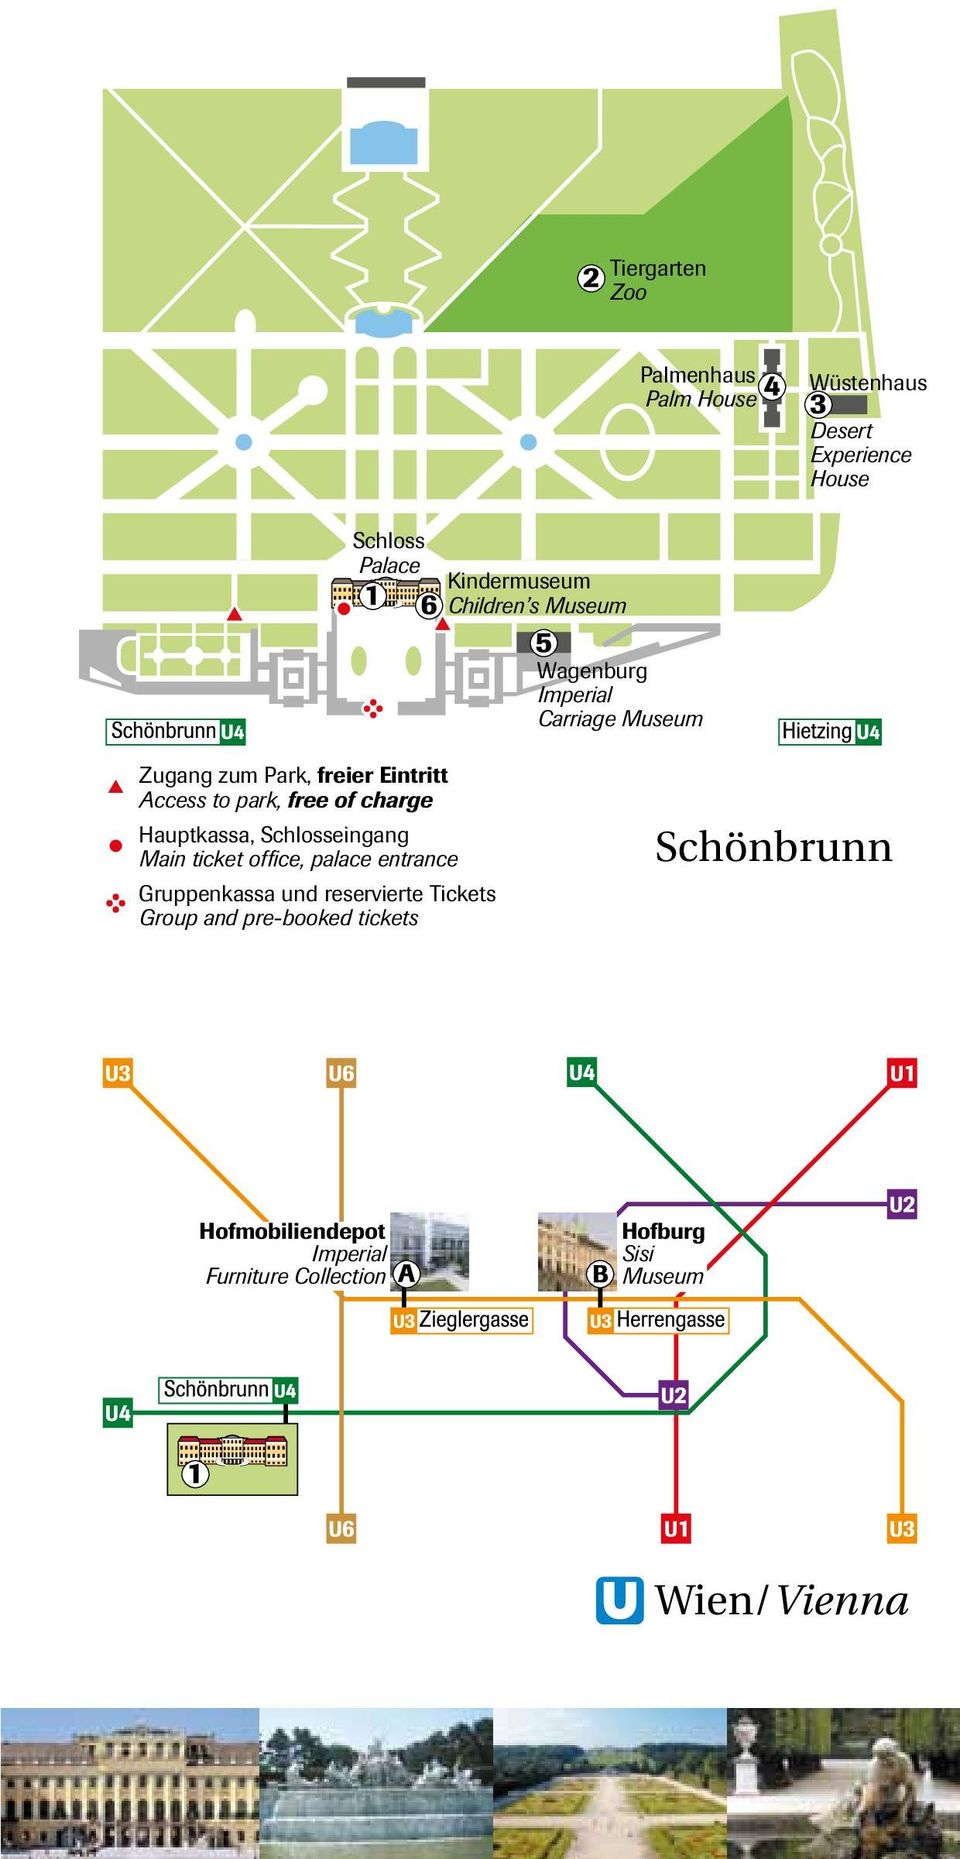 Hauptkassa, Schlosseingang Main ticket office, palace entrance Gruppenkassa und reservierte Tickets Group